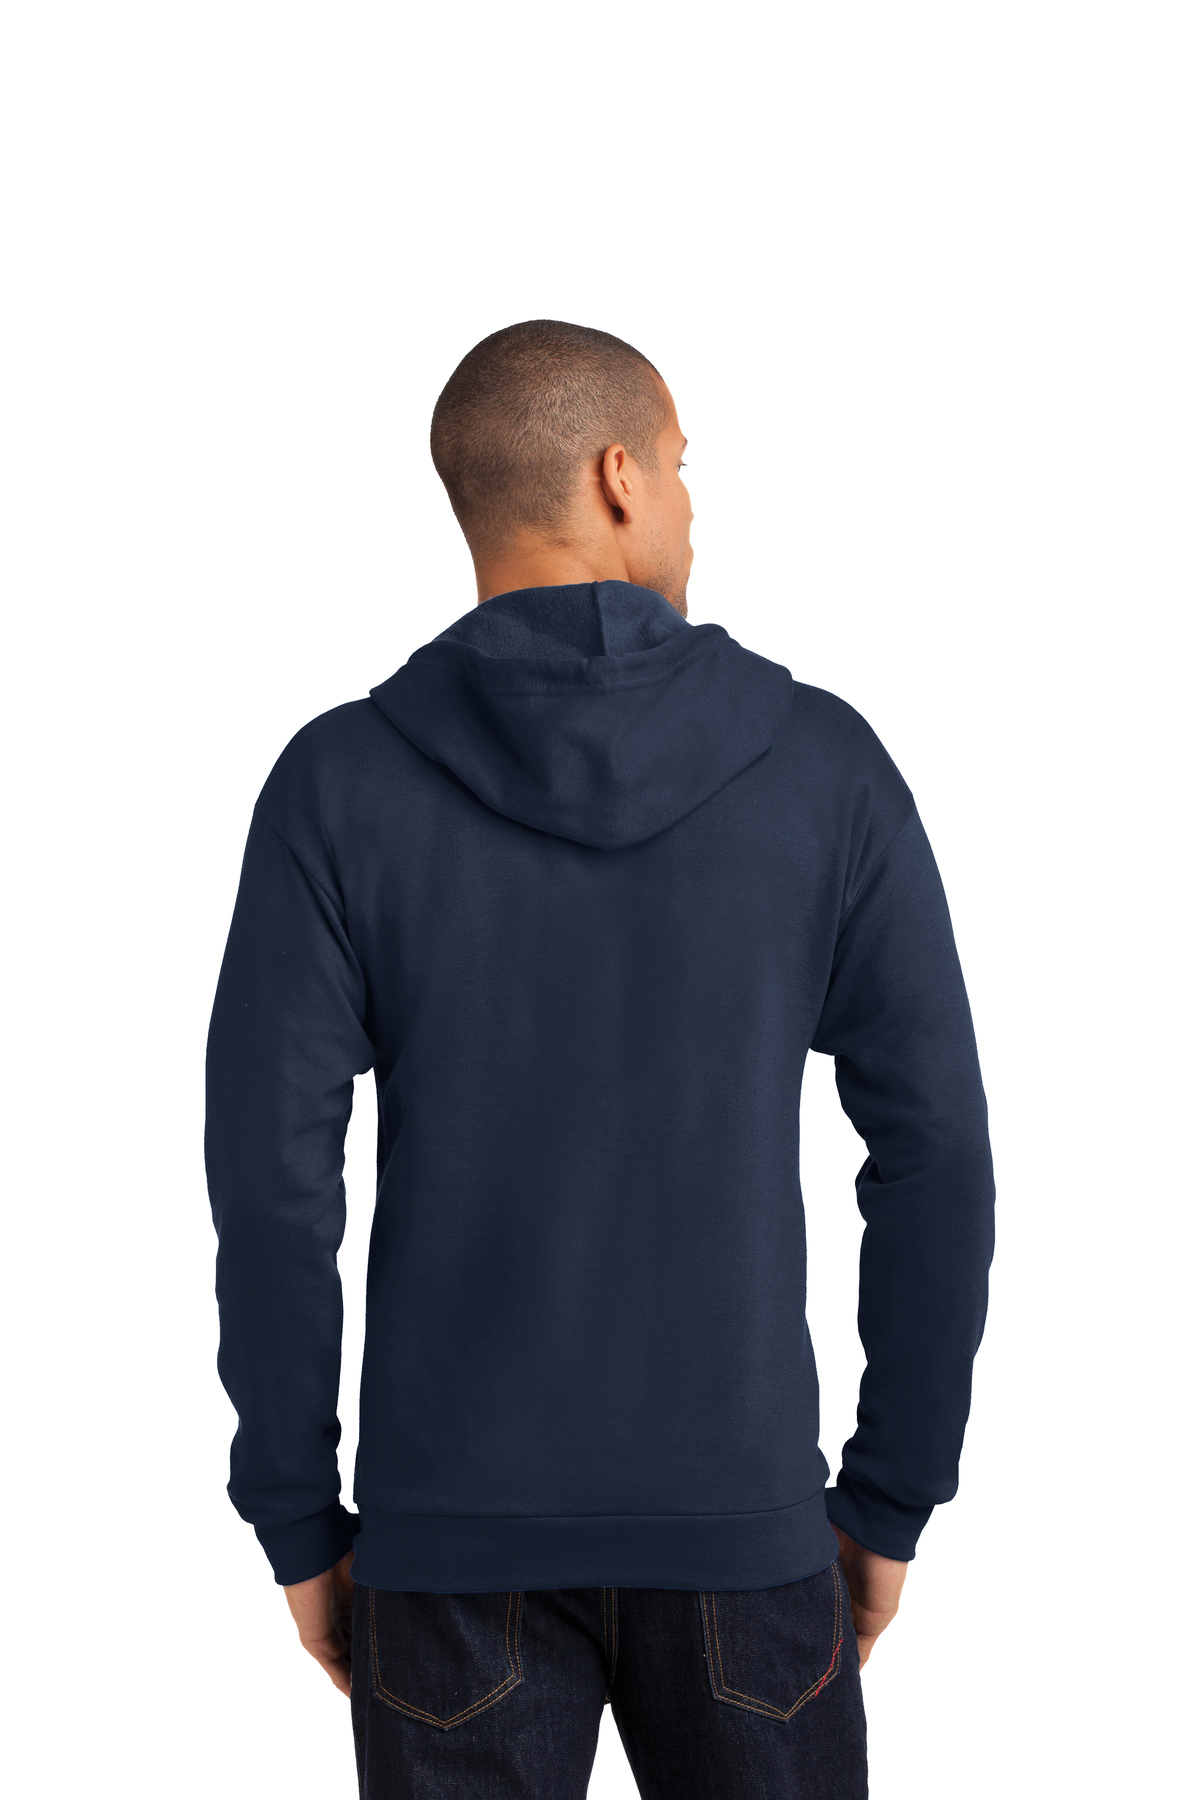 Anvil Full-Zip Hooded Sweatshirt 71600 S-3XL NEW 